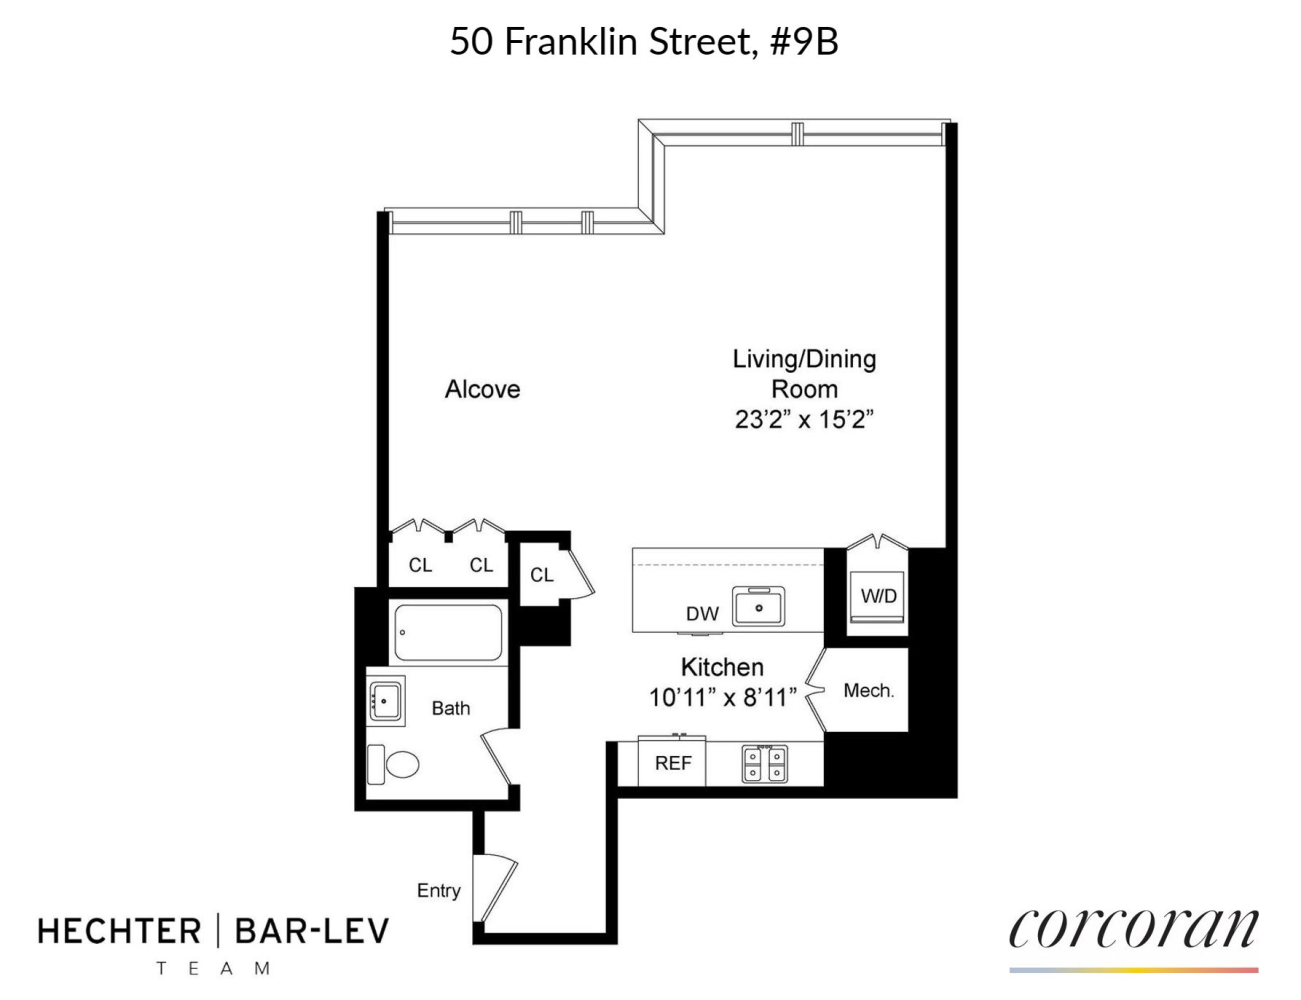 Floorplan for 50 Franklin Street, 9B